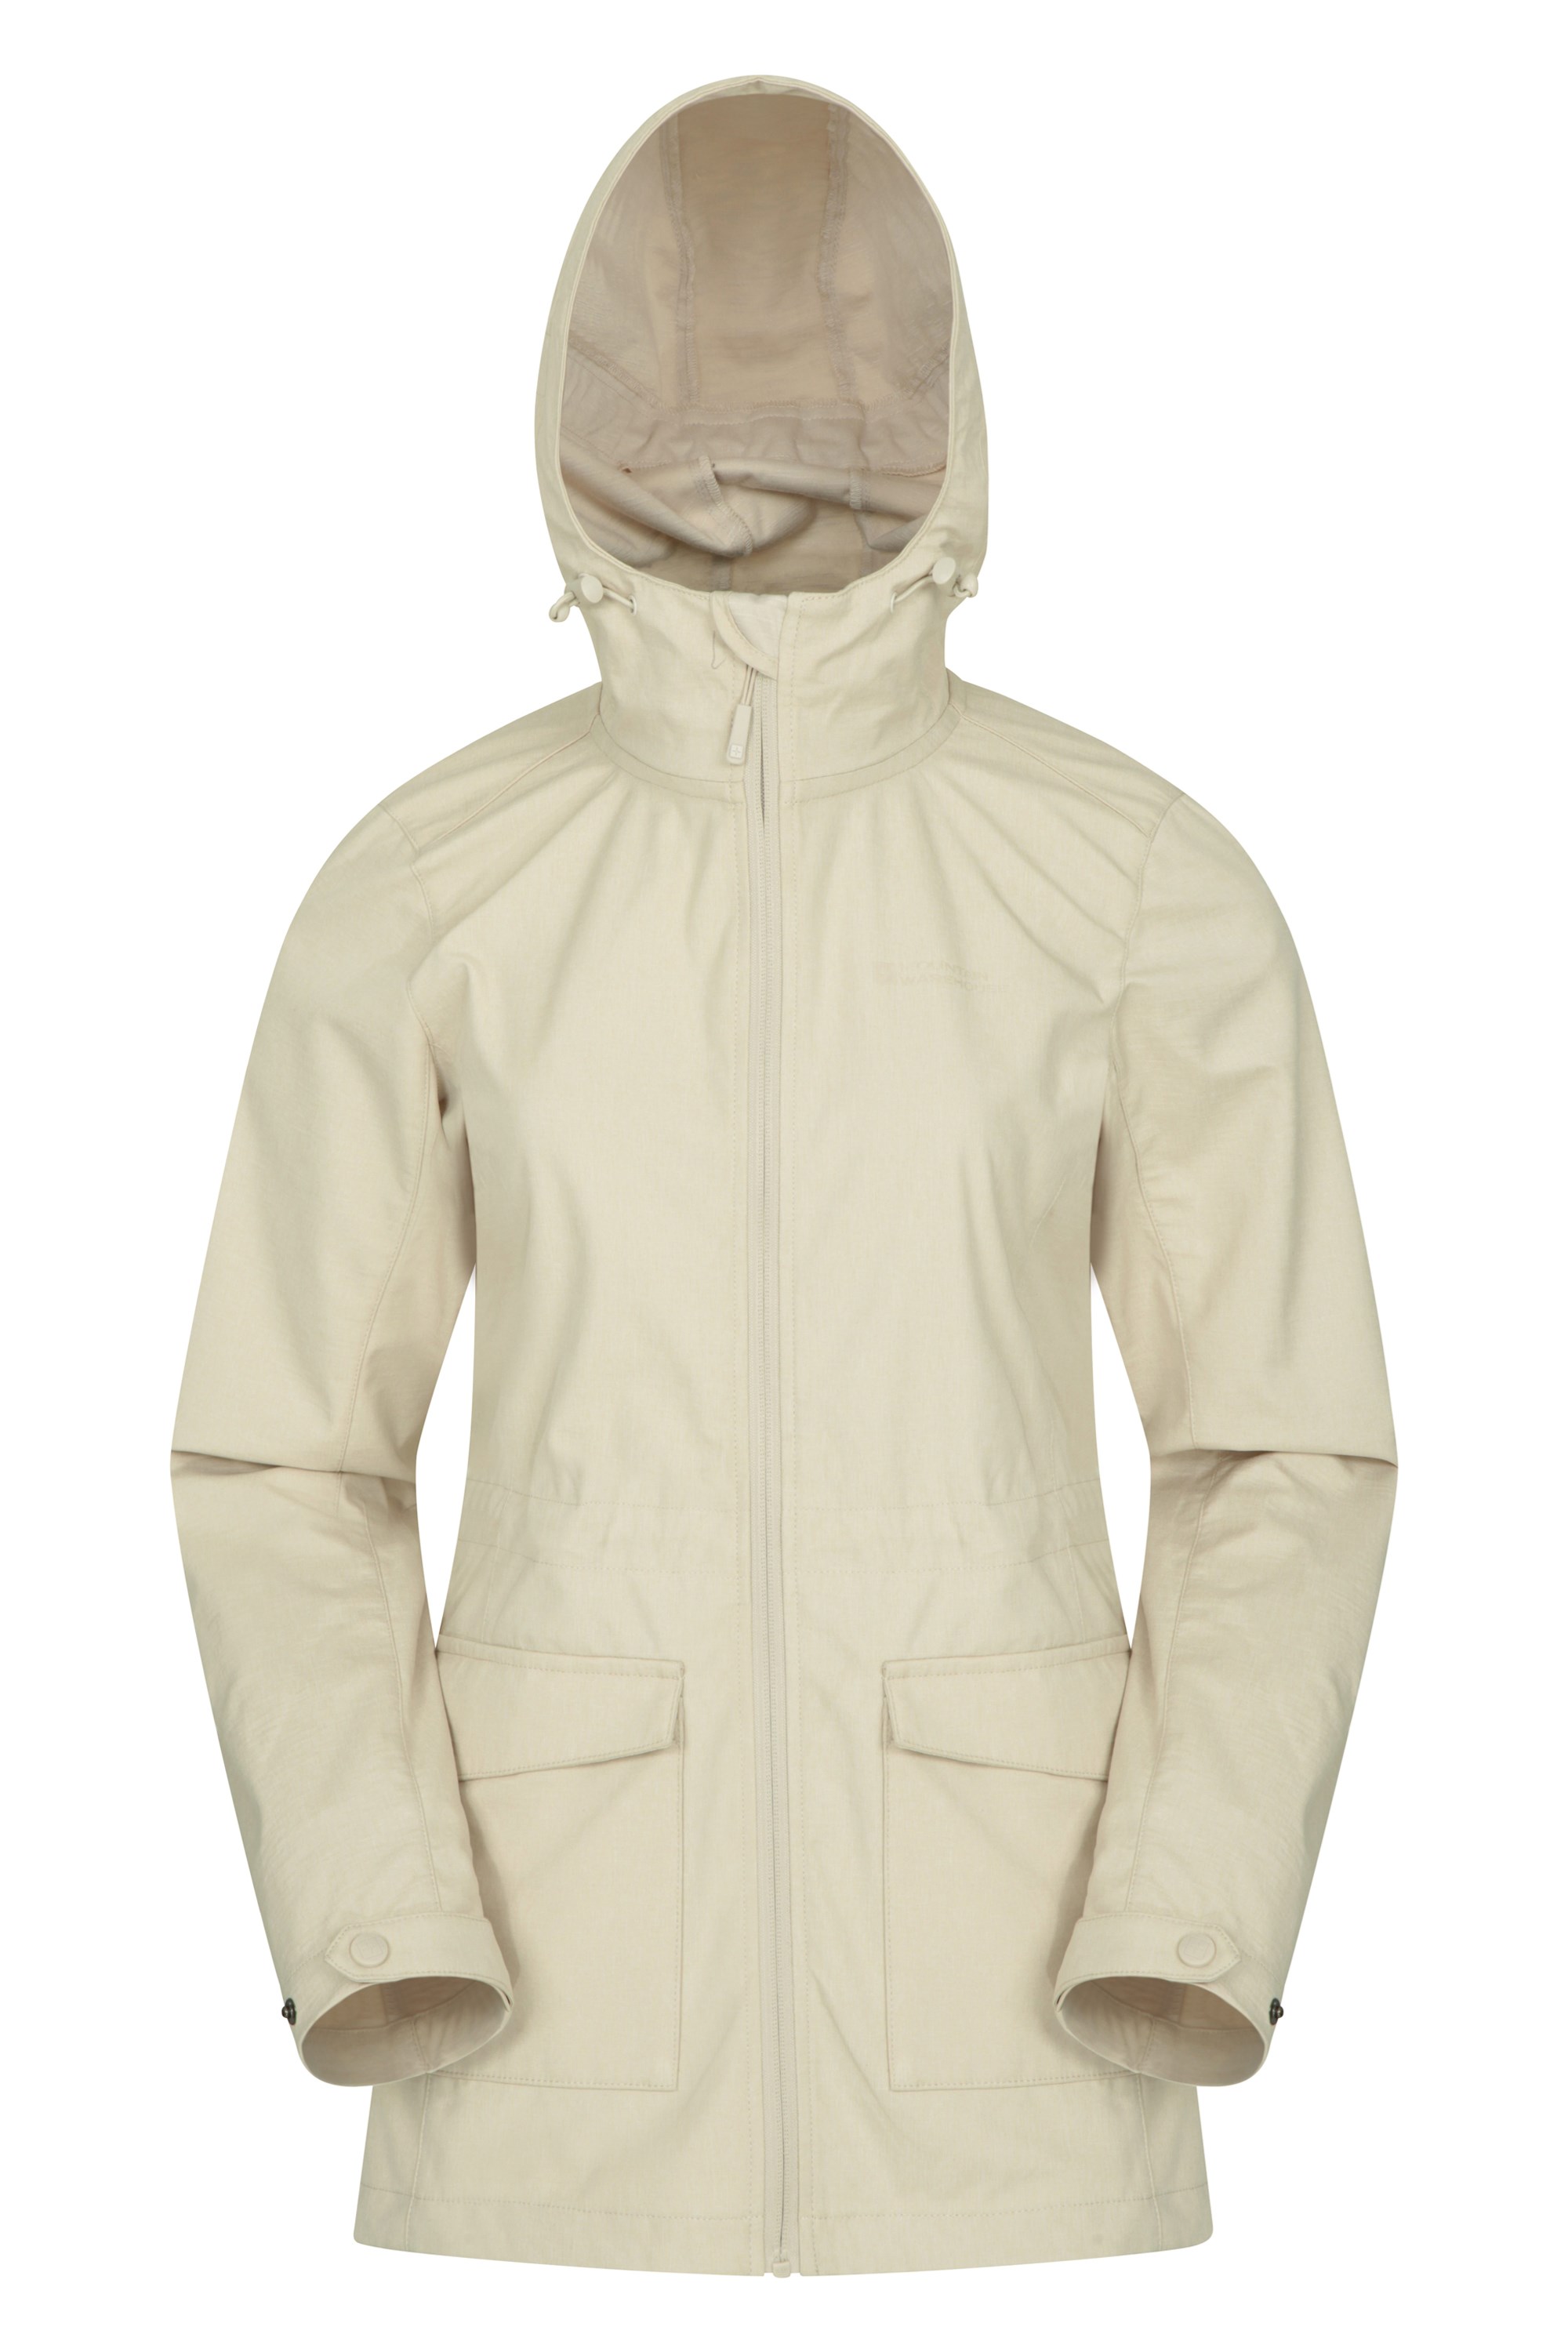 Pines Womens Long Softshell Jacket | Mountain Warehouse GB